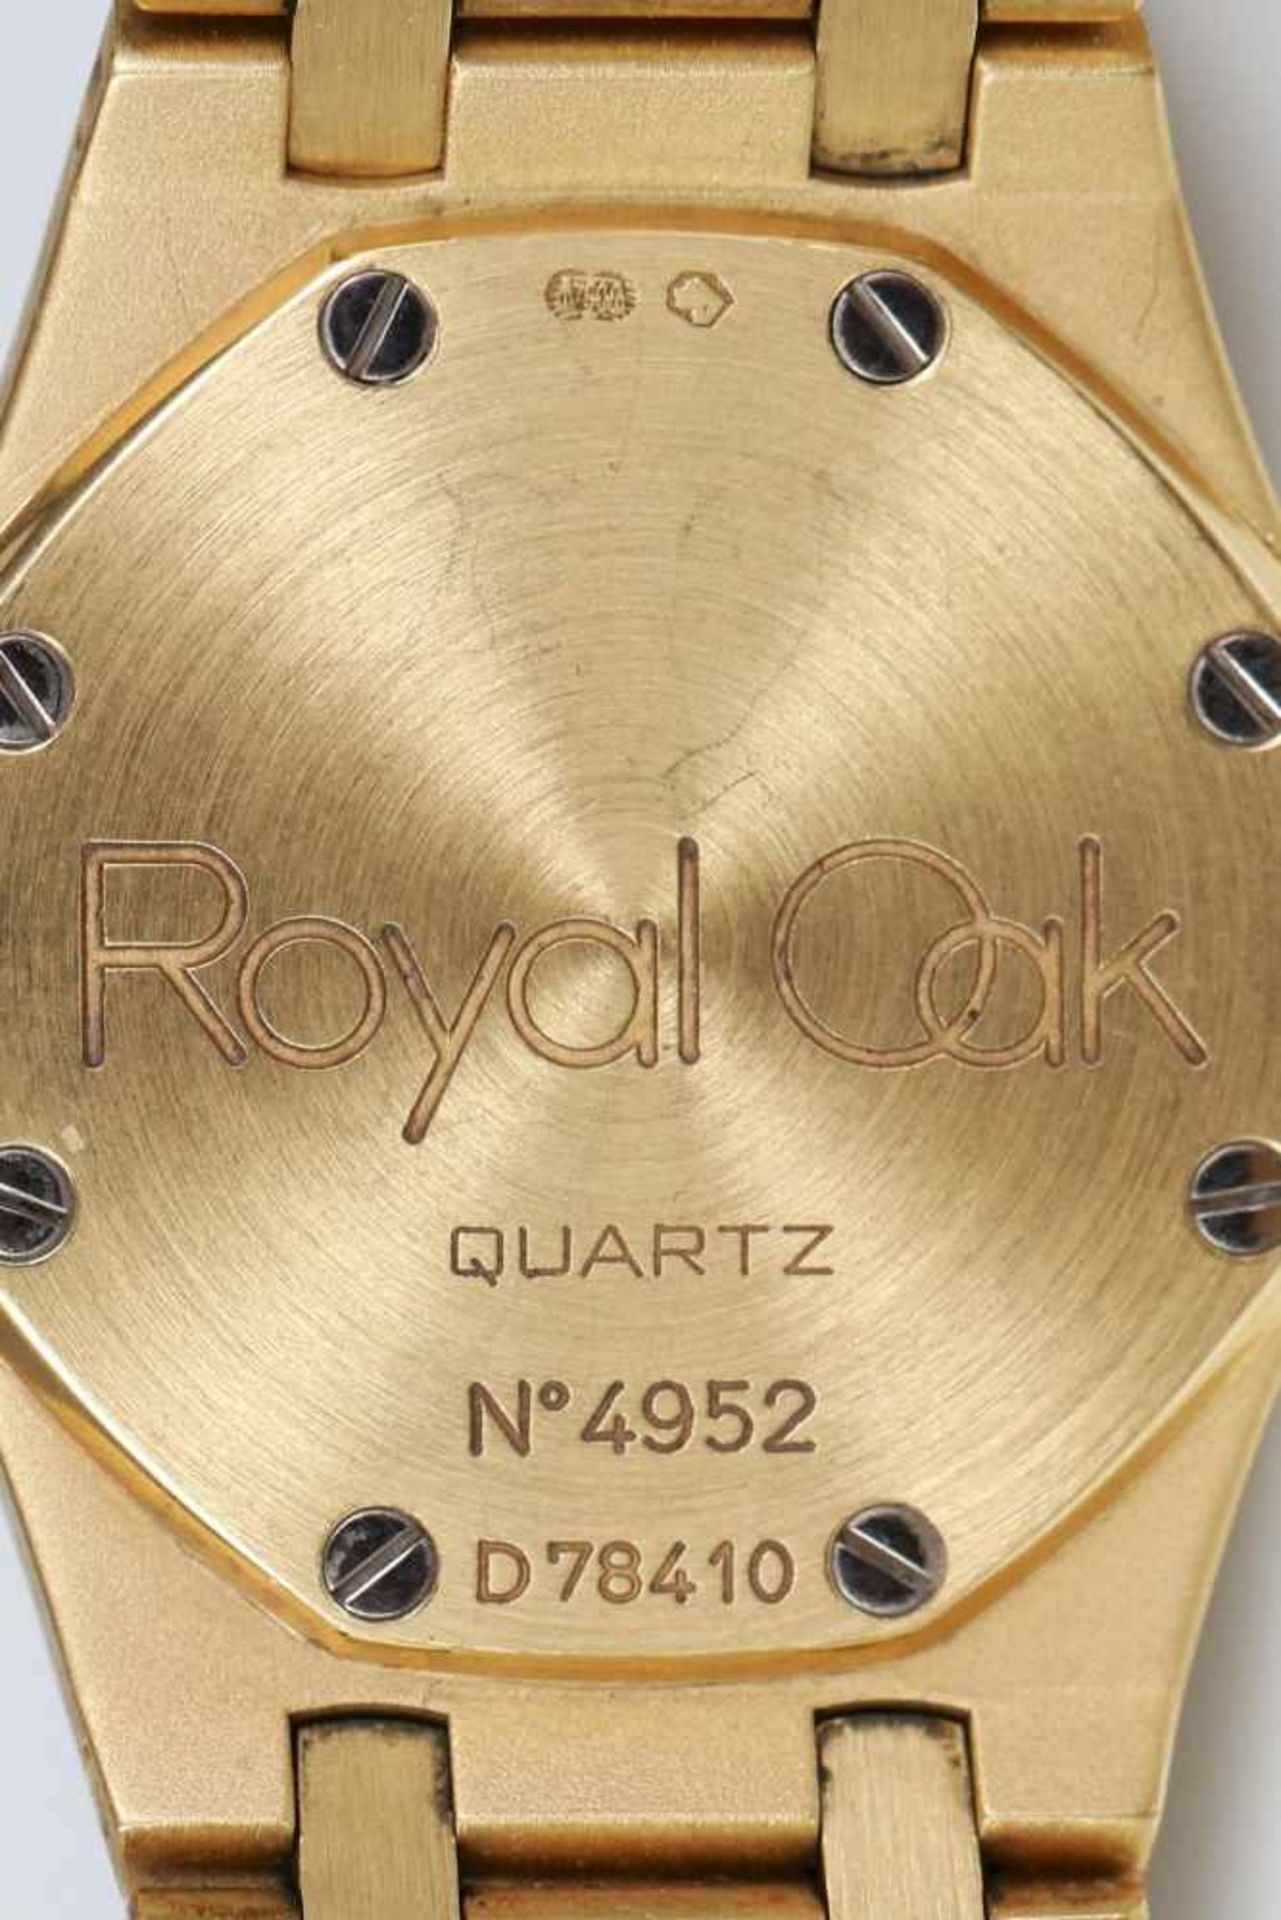 AUDEMARS PIGUET ArmbanduhrModell Royal Oak Lady, 750er Gelbgold (Gehäuse und Armband), oktogonale - Bild 2 aus 3